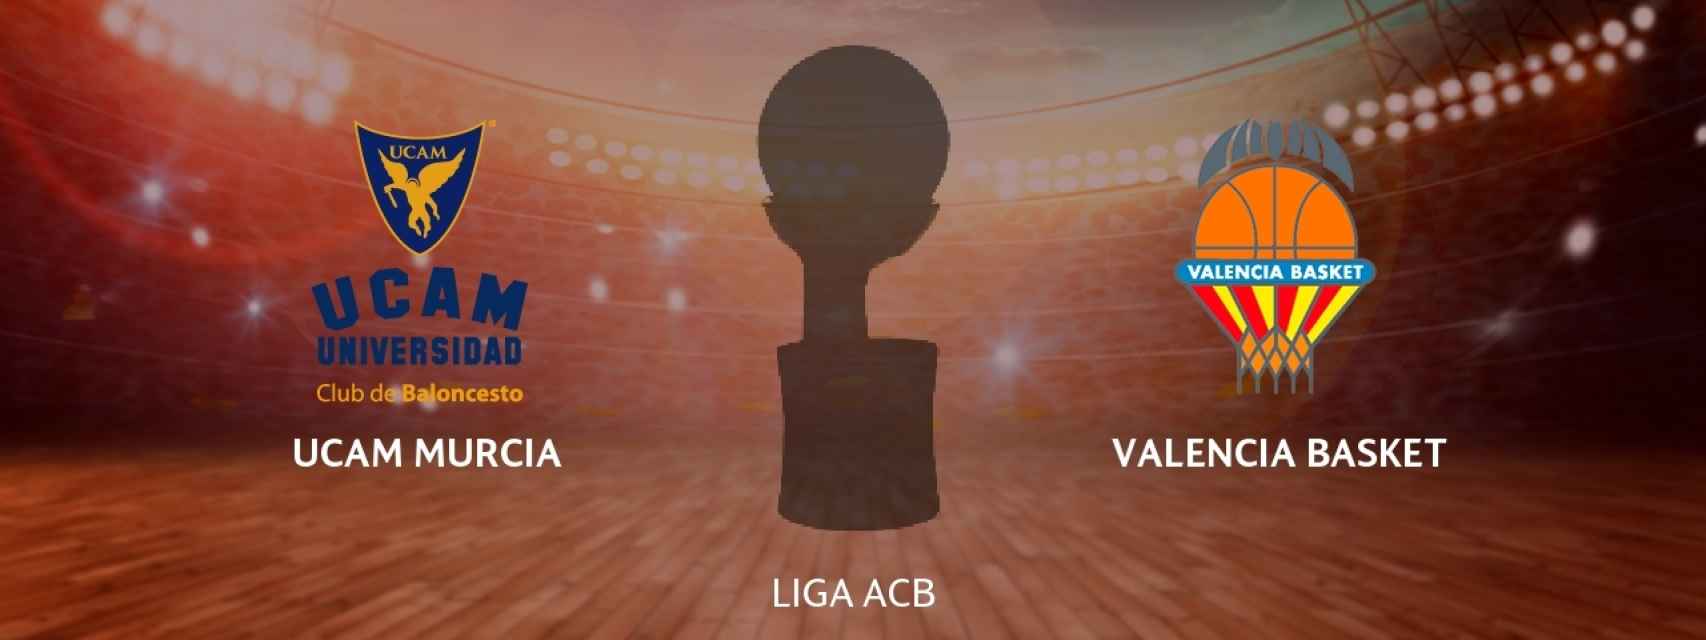 UCAM Murcia - Valencia Basket